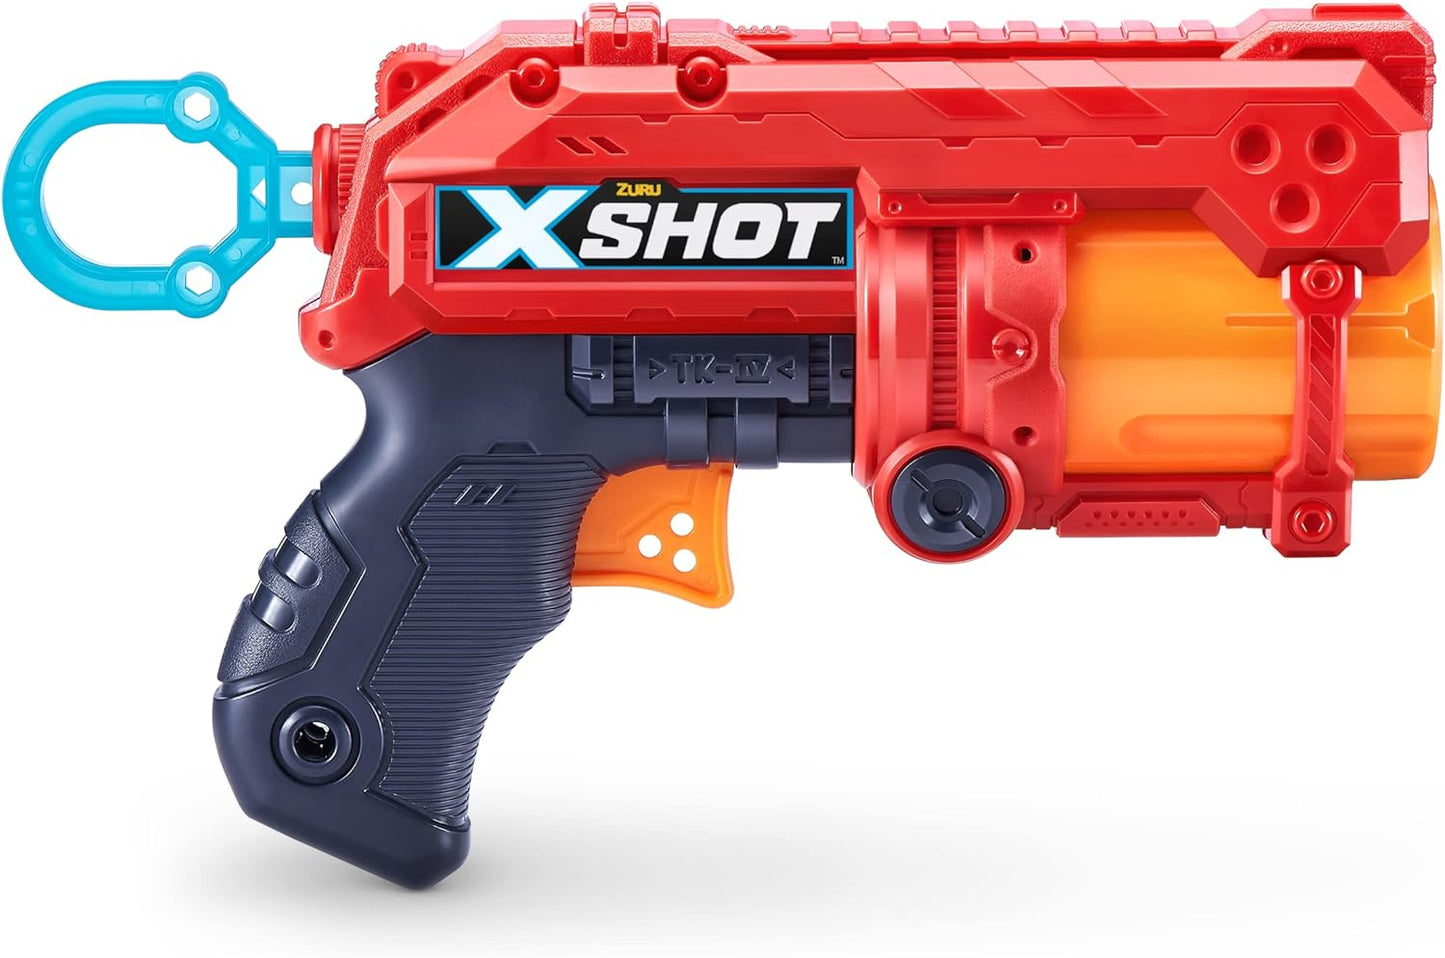 X Shot Excel Fury 4 Blaster 16 Darts